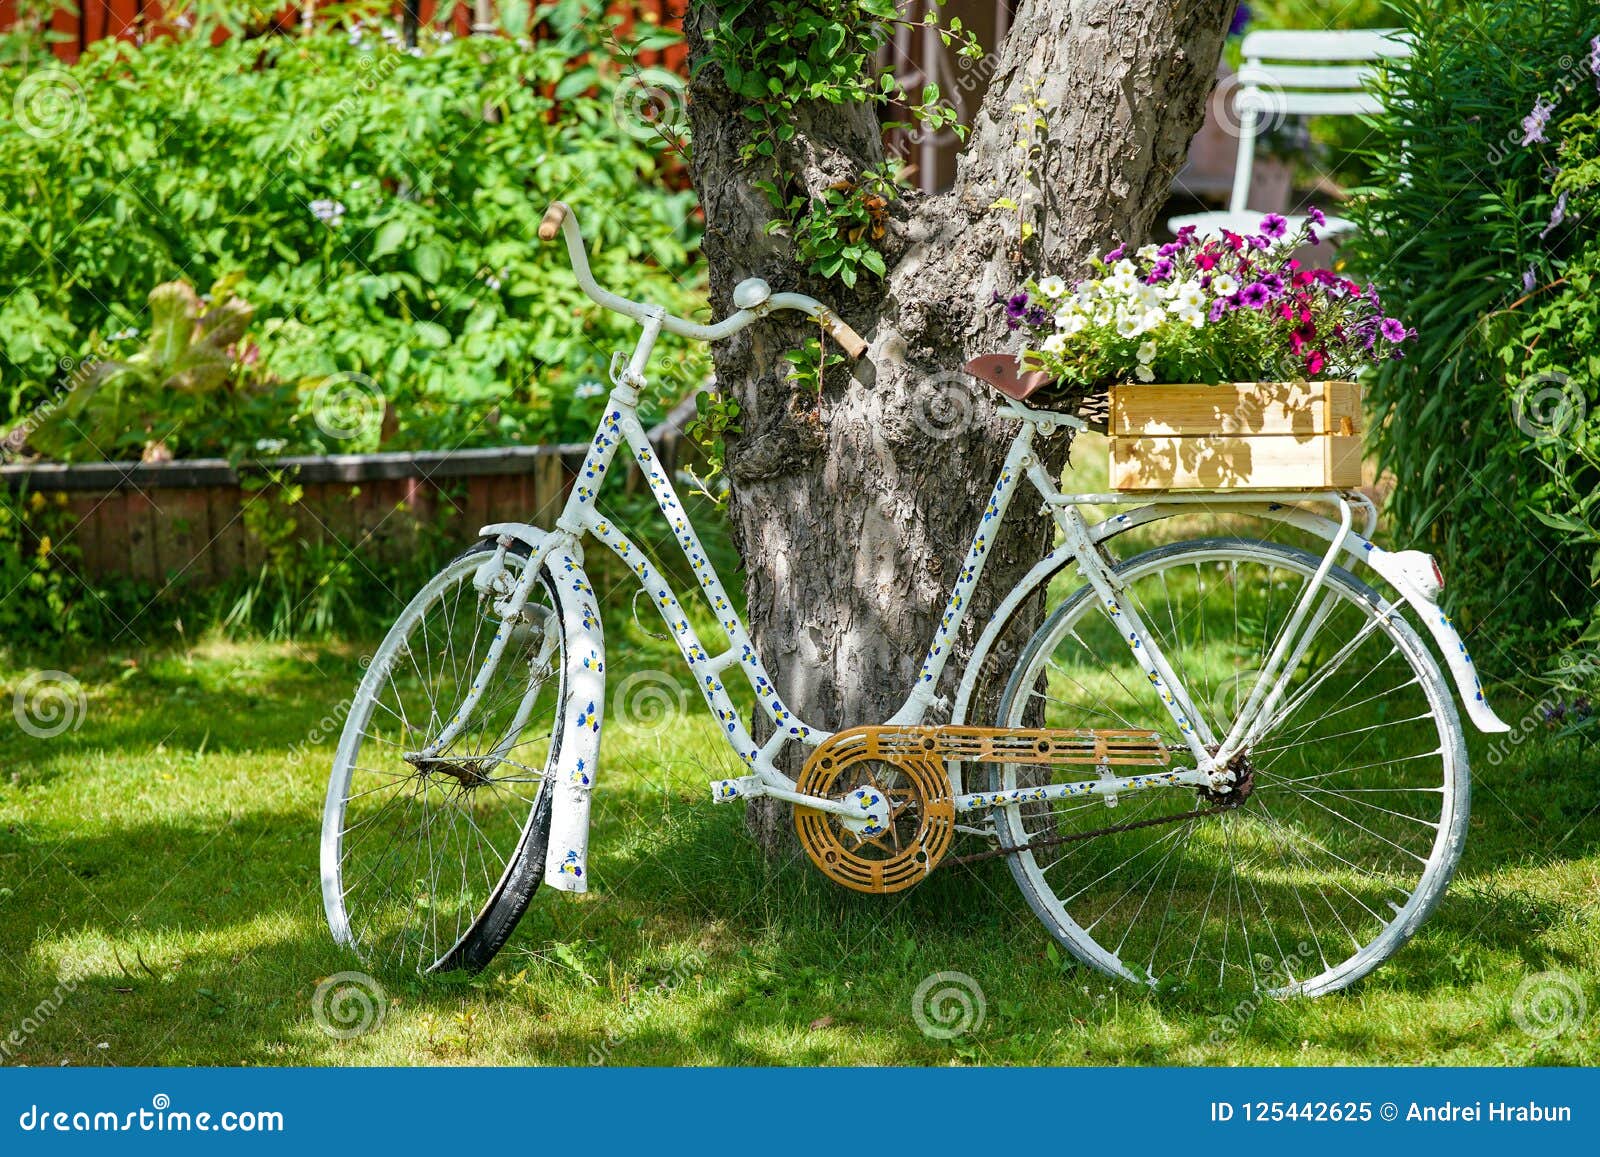 vintage bicycle with flowers